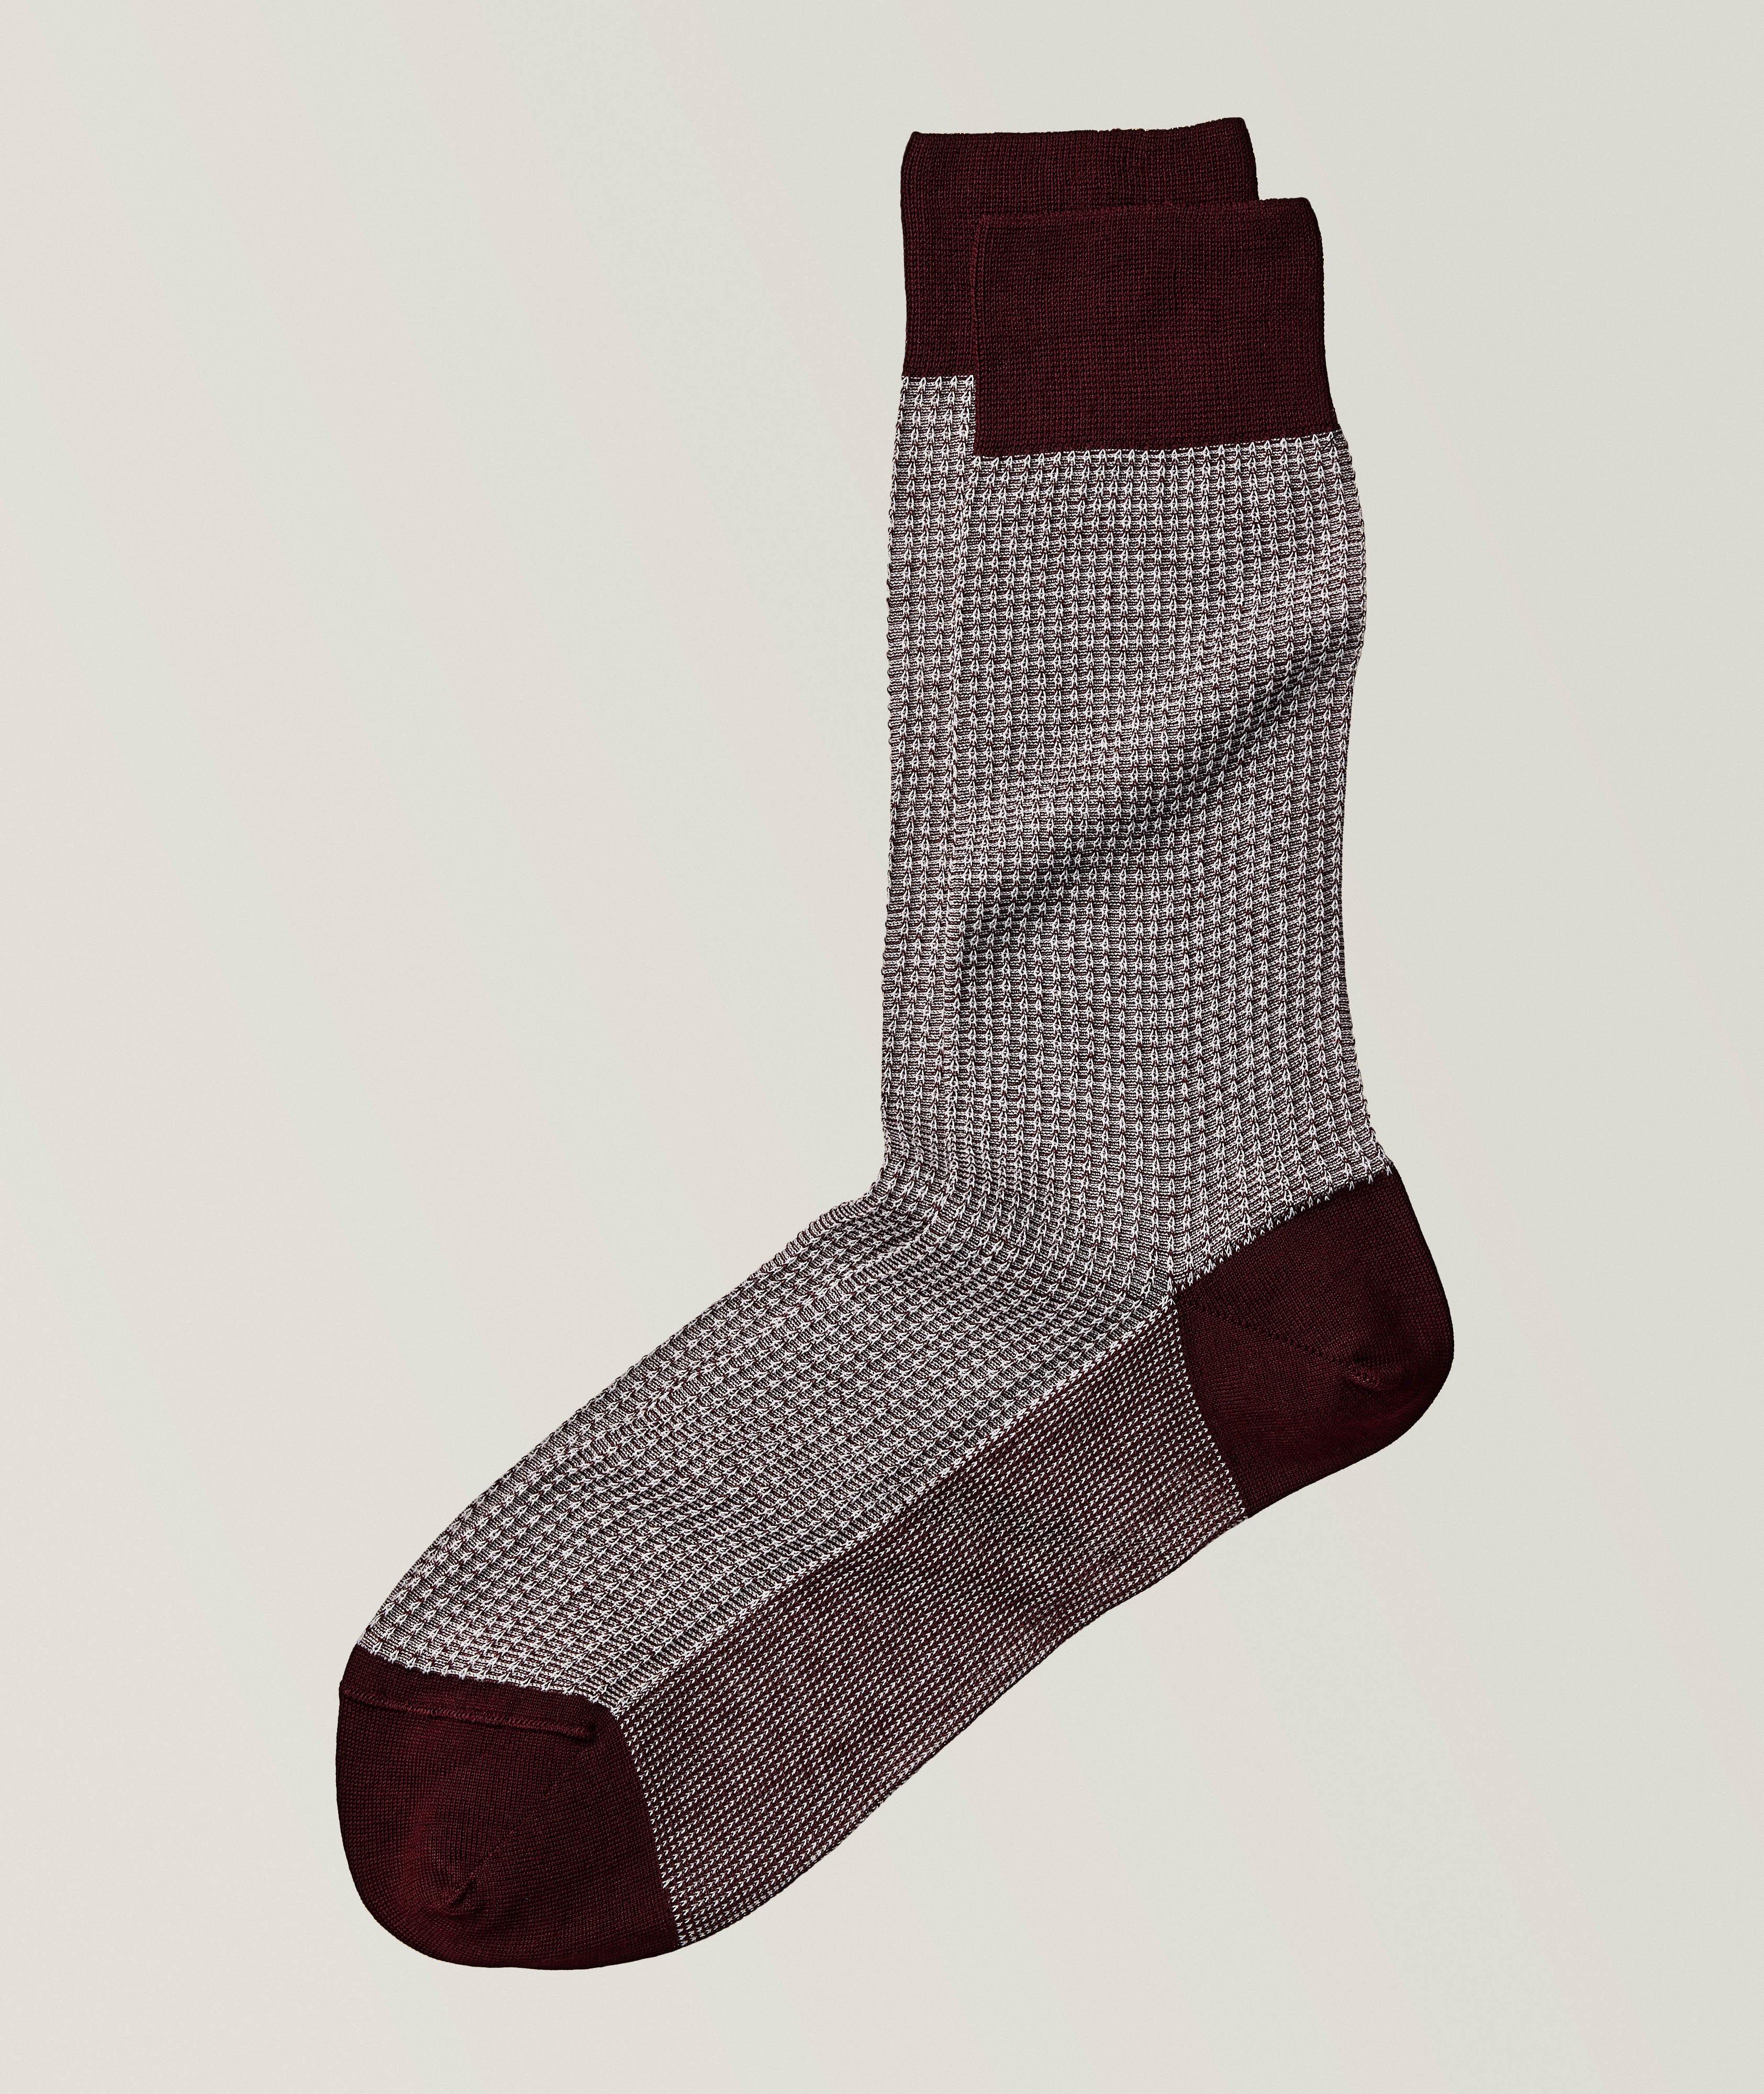 Darlot Fine Weave Cotton Dress Socks  image 0